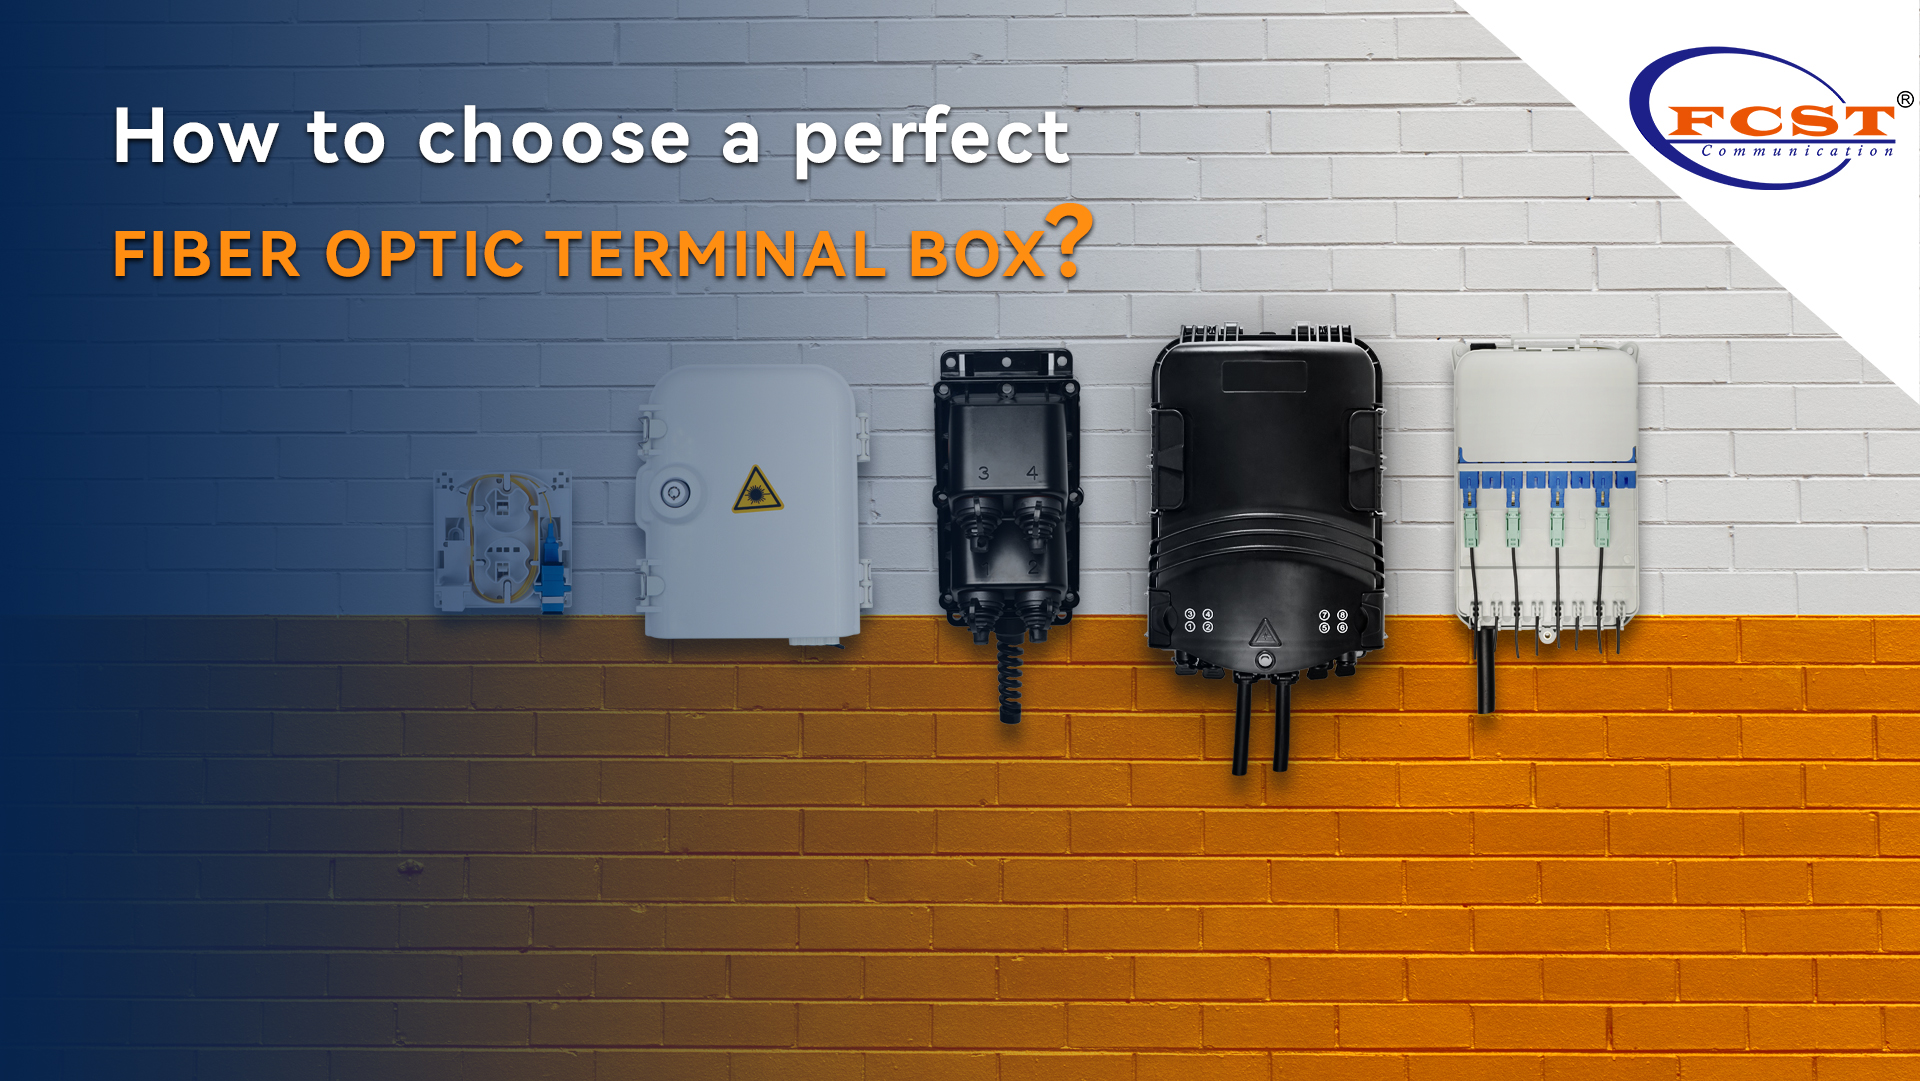 How to choose a perfect fiber optic terminal box?